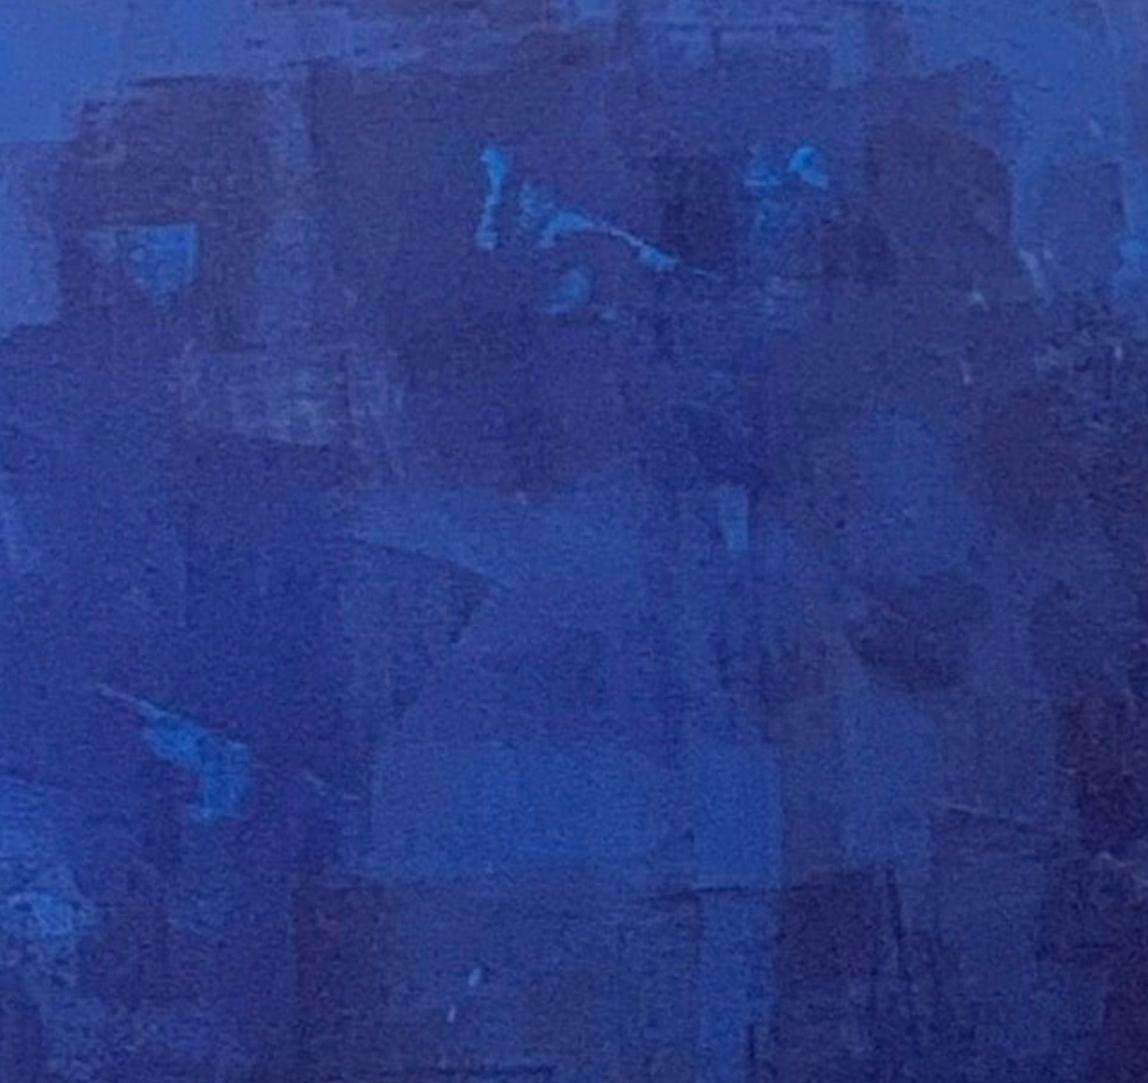 La mer profonde, océan contemporain, bleu foncé, essence de l'océan, art de Floride - Violet Interior Painting par Juanita Bellavance 